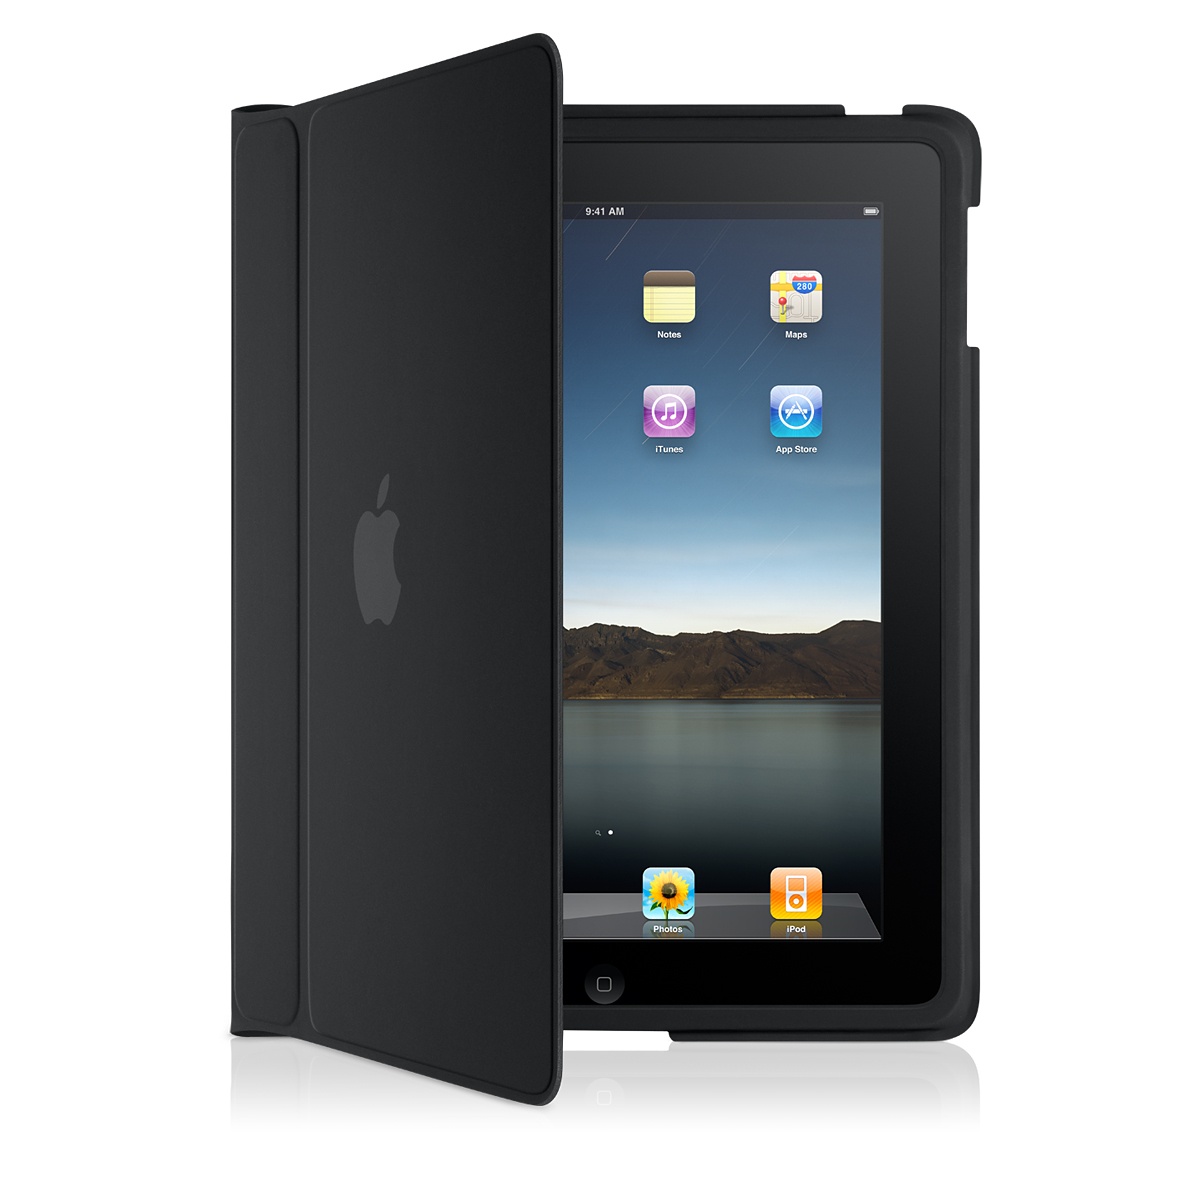 http://2.bp.blogspot.com/_vwuLjslQGek/S7Yc_zliOzI/AAAAAAAAH6I/9RmJkI-a9g0/s1600/Apple-iPad-Case.jpg